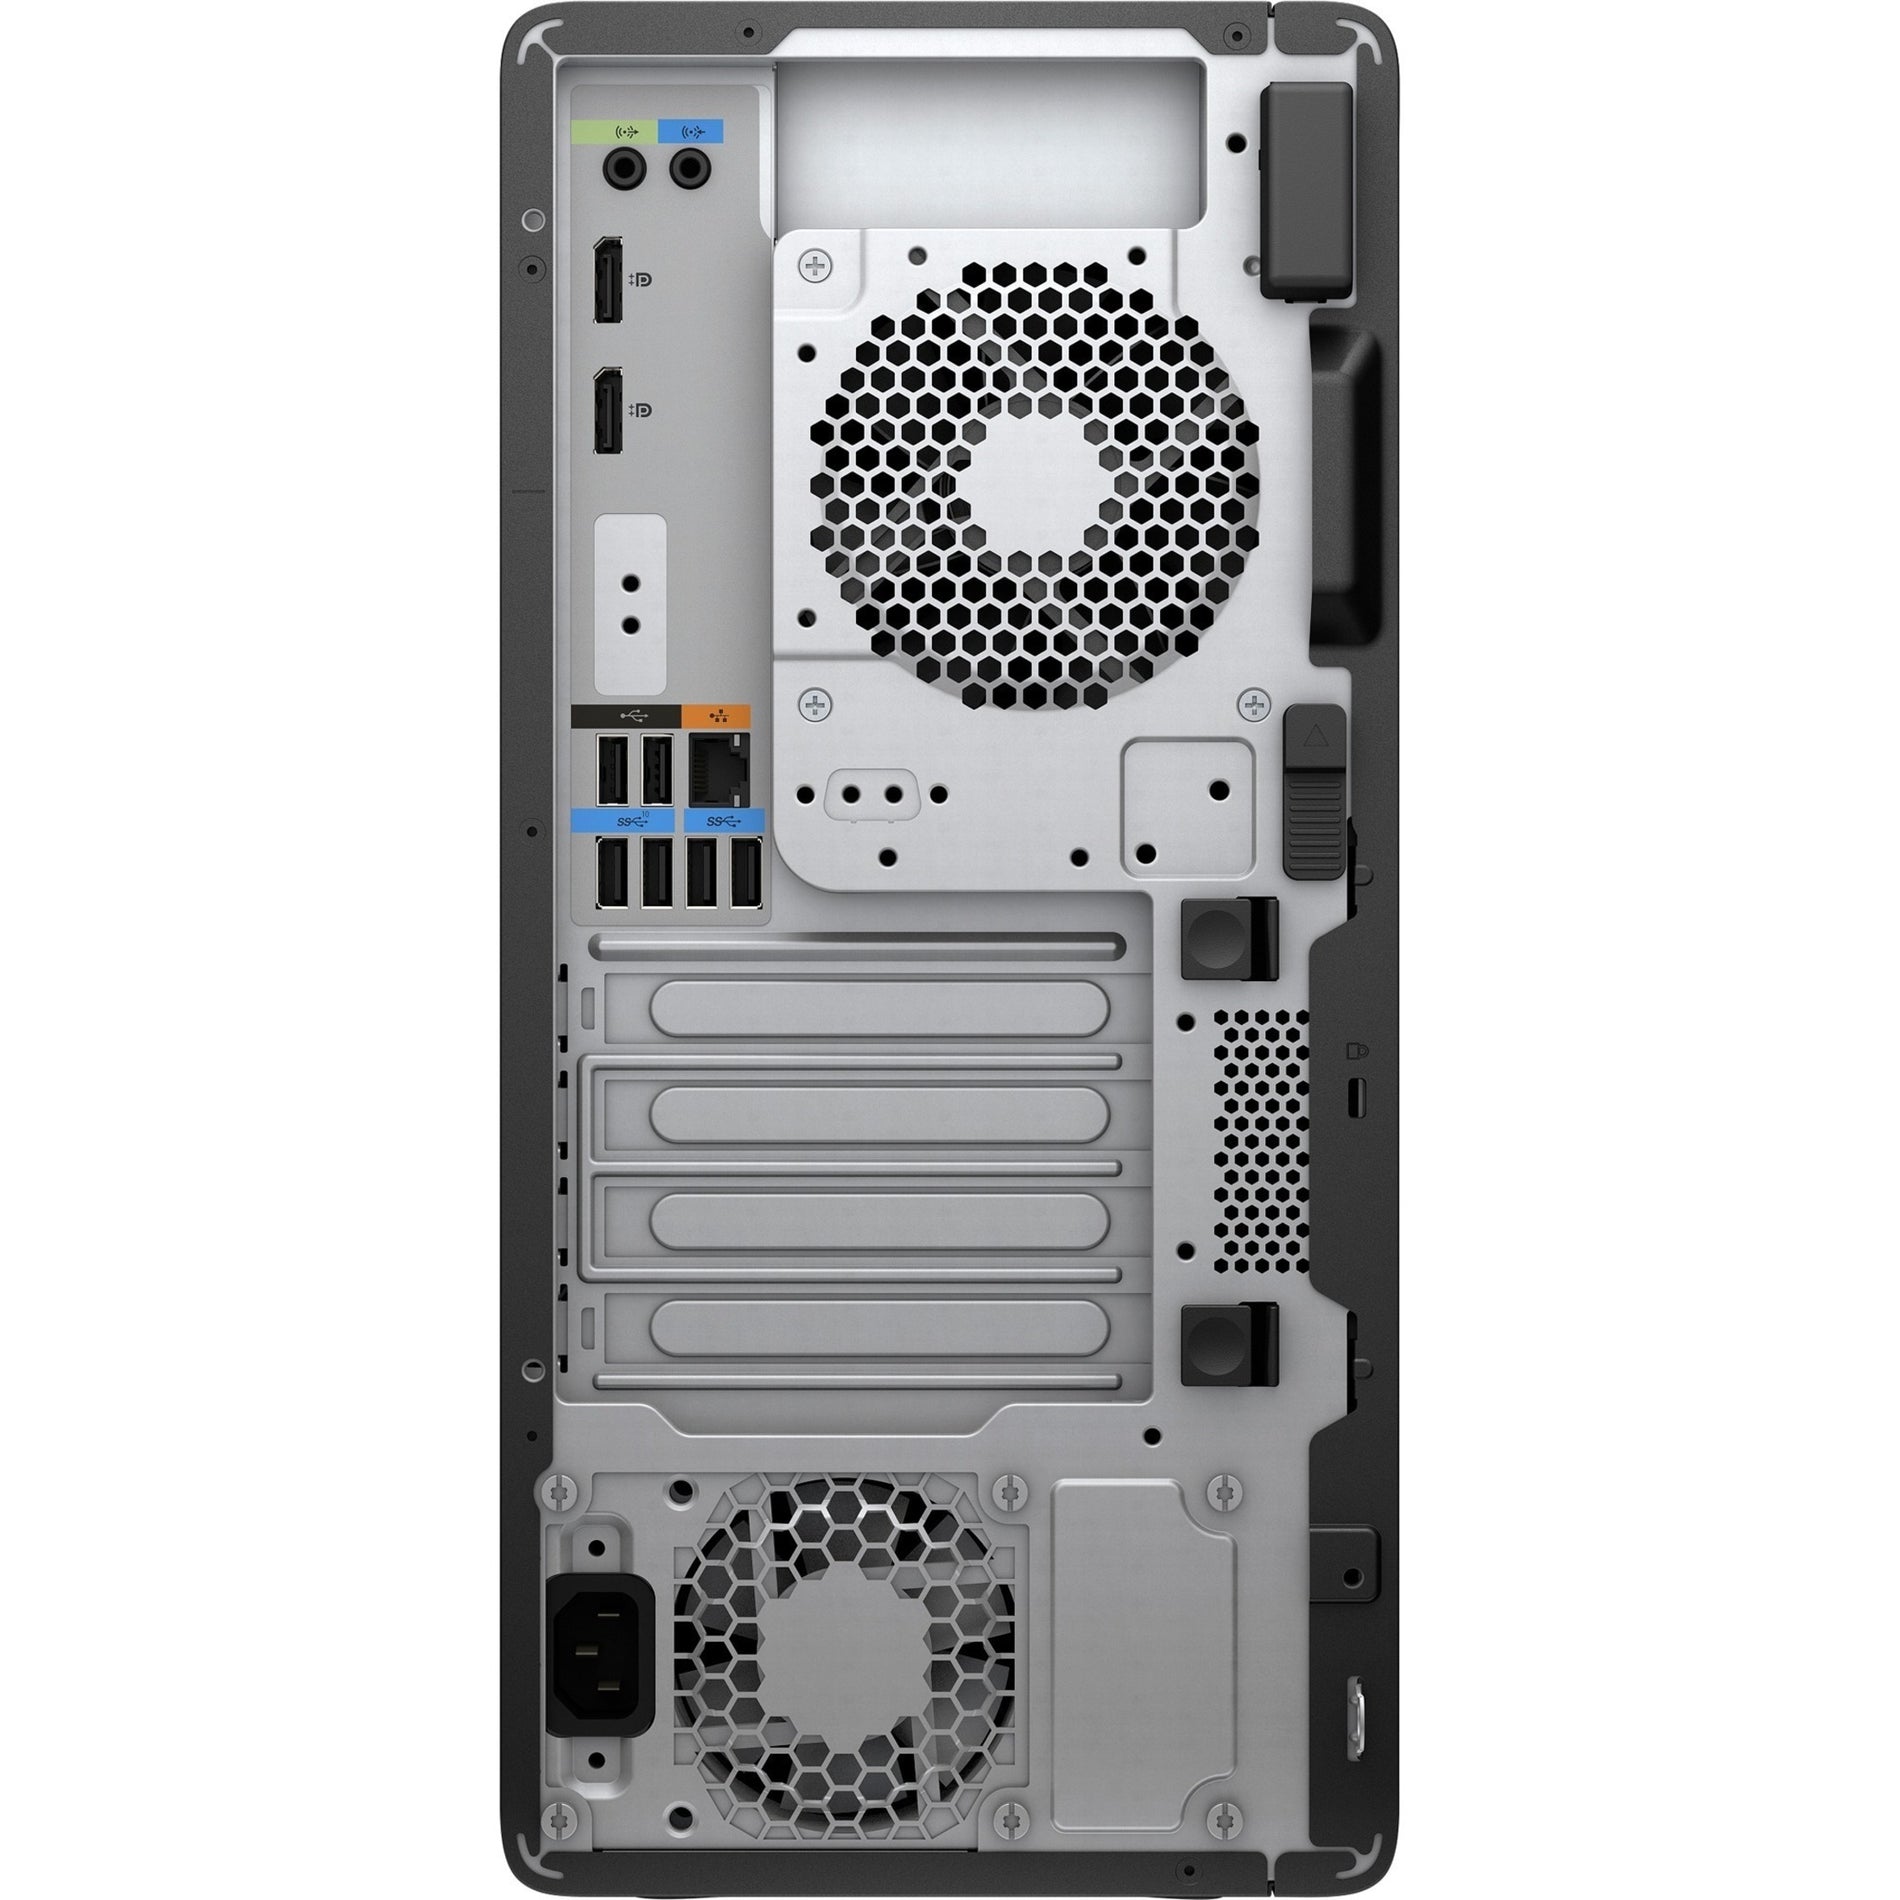 HP Z2 Tower G5 Workstation, Intel Core i7 Octa-core, 16GB RAM, 512GB SSD, Windows 11 Pro